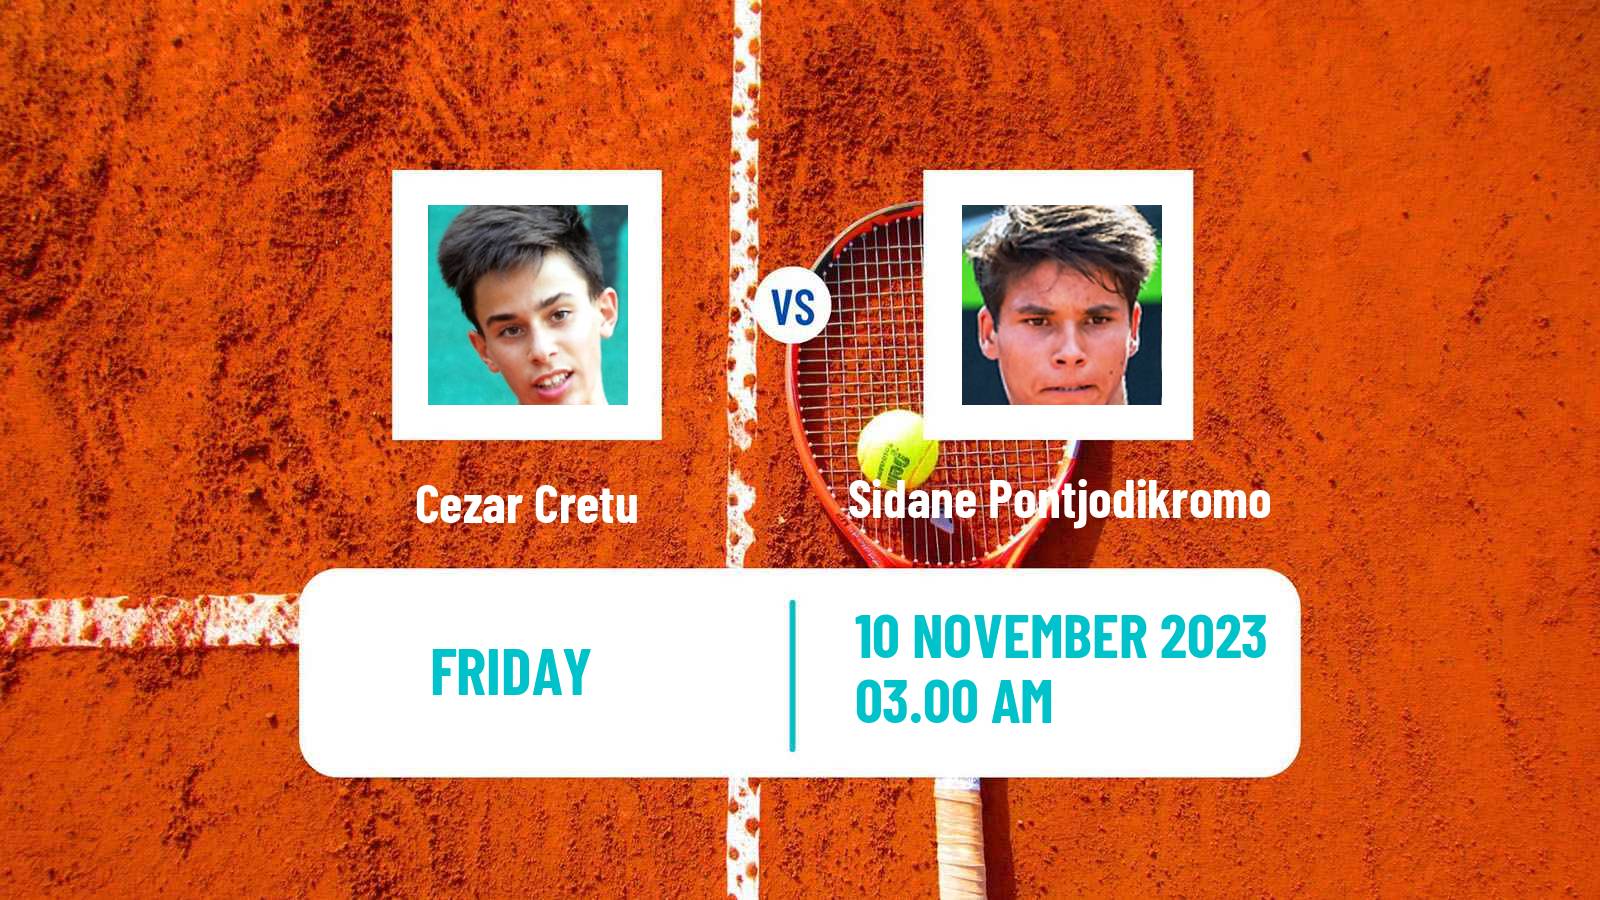 Tennis ITF M25 Heraklion 2 Men Cezar Cretu - Sidane Pontjodikromo